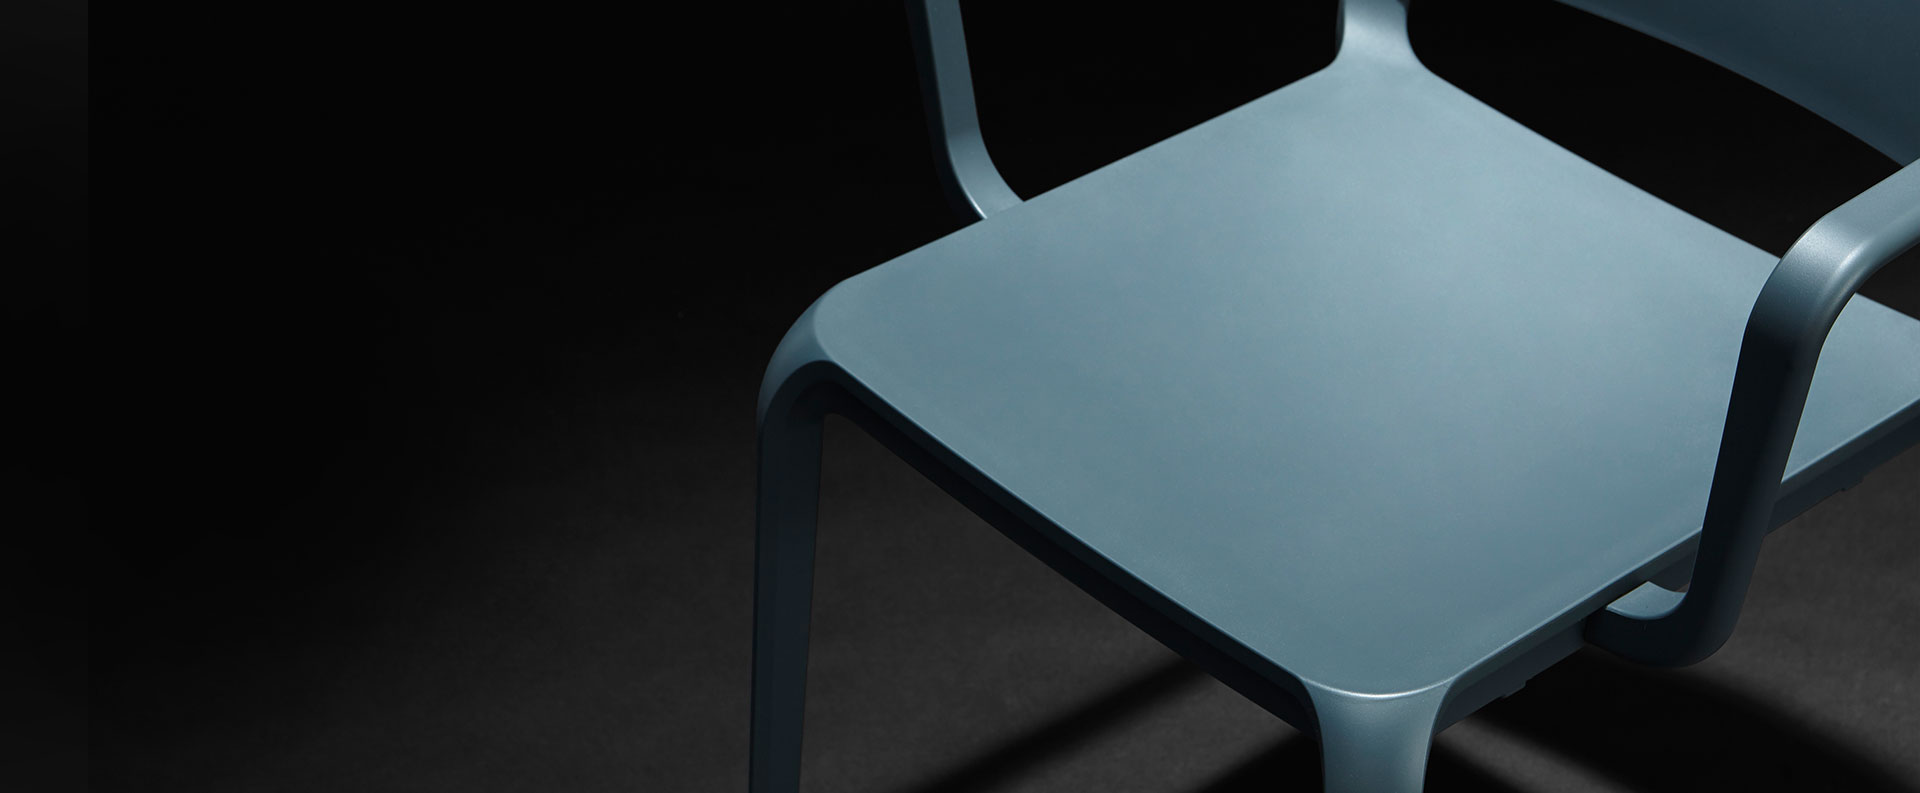 Grey chair detail